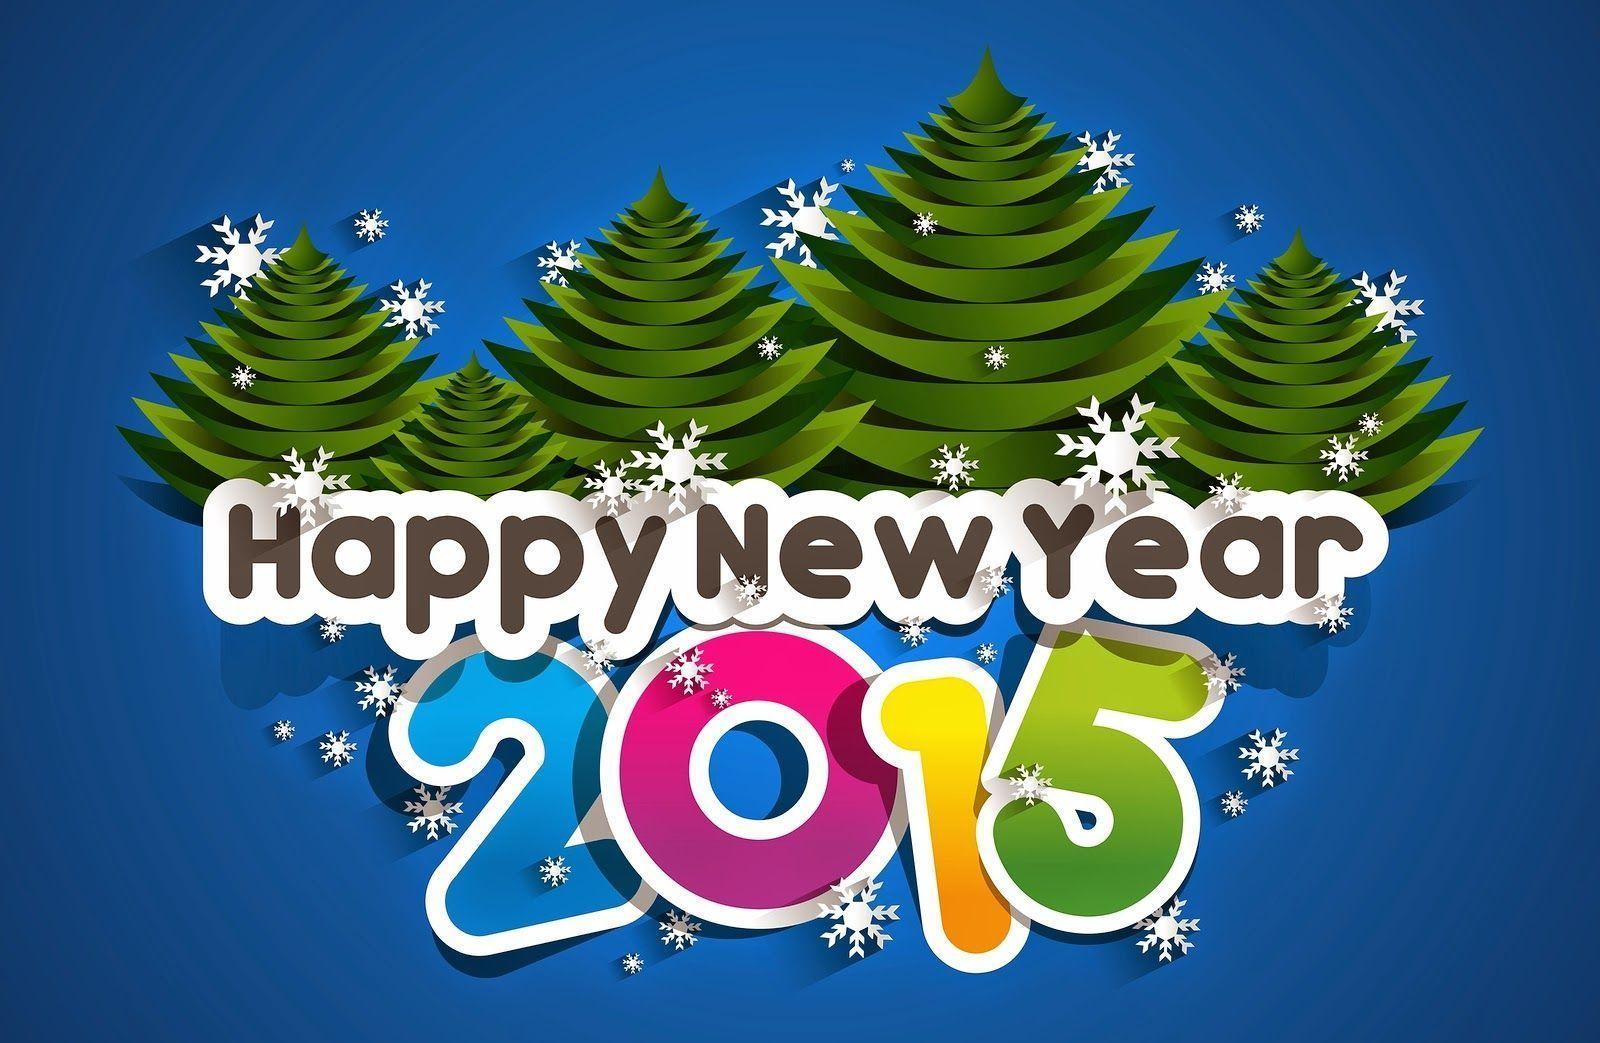 Best Happy New Year 2015 Image